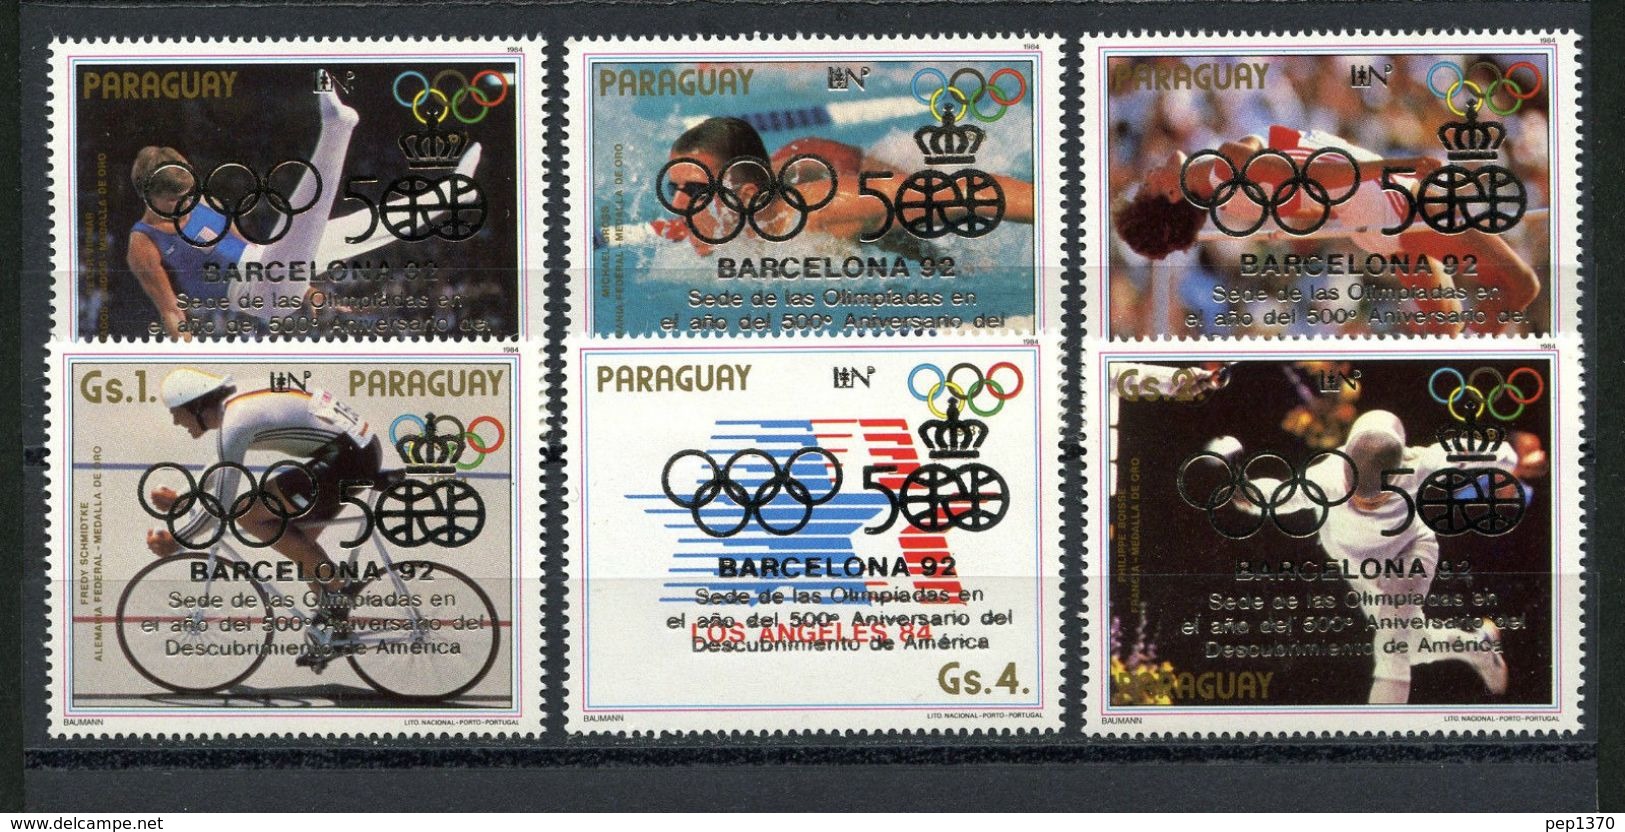 PARAGUAY 1987 - OLYMPICS BARCELONA 92 - YVERT Nº 2280-2285 - MICHEL 4072-4077 - SCOTT 2199 - OVERPRINT 500 ANIVERSARY - Springreiten